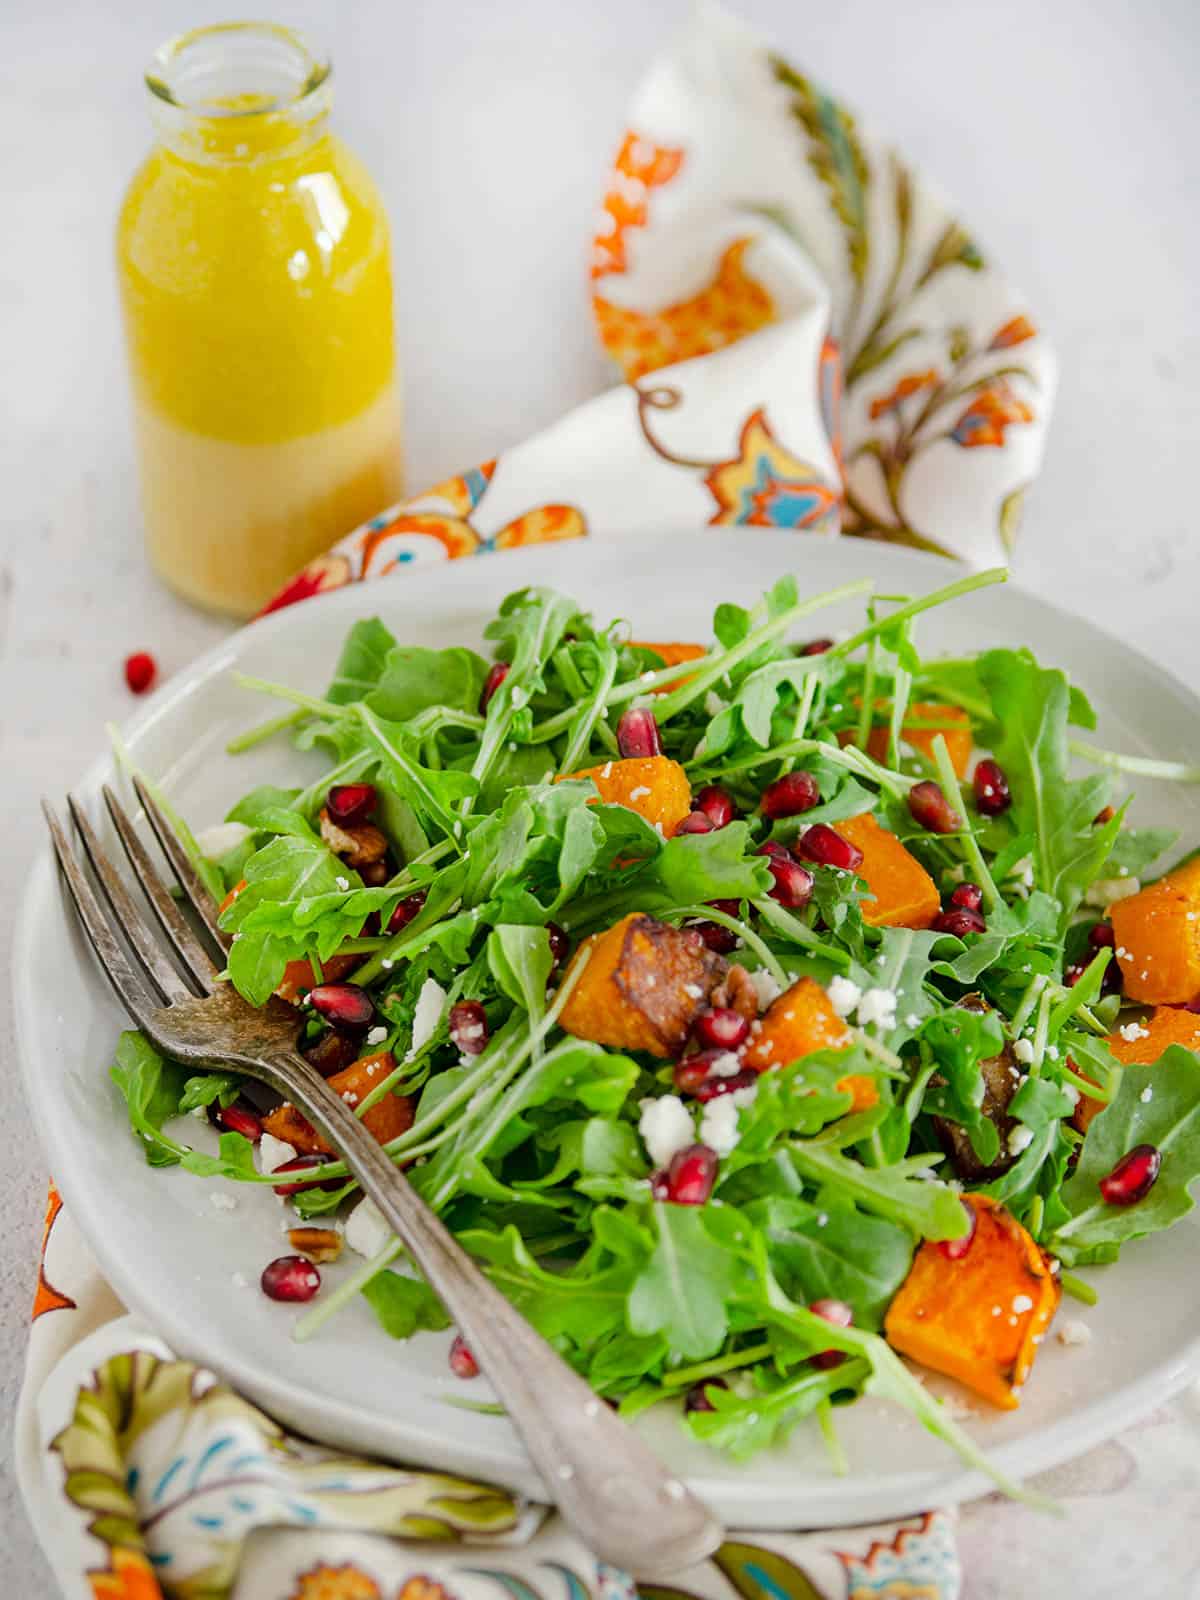 A plate of arugula and butternut squash salad next to a bottle of citrus vinaigrette.